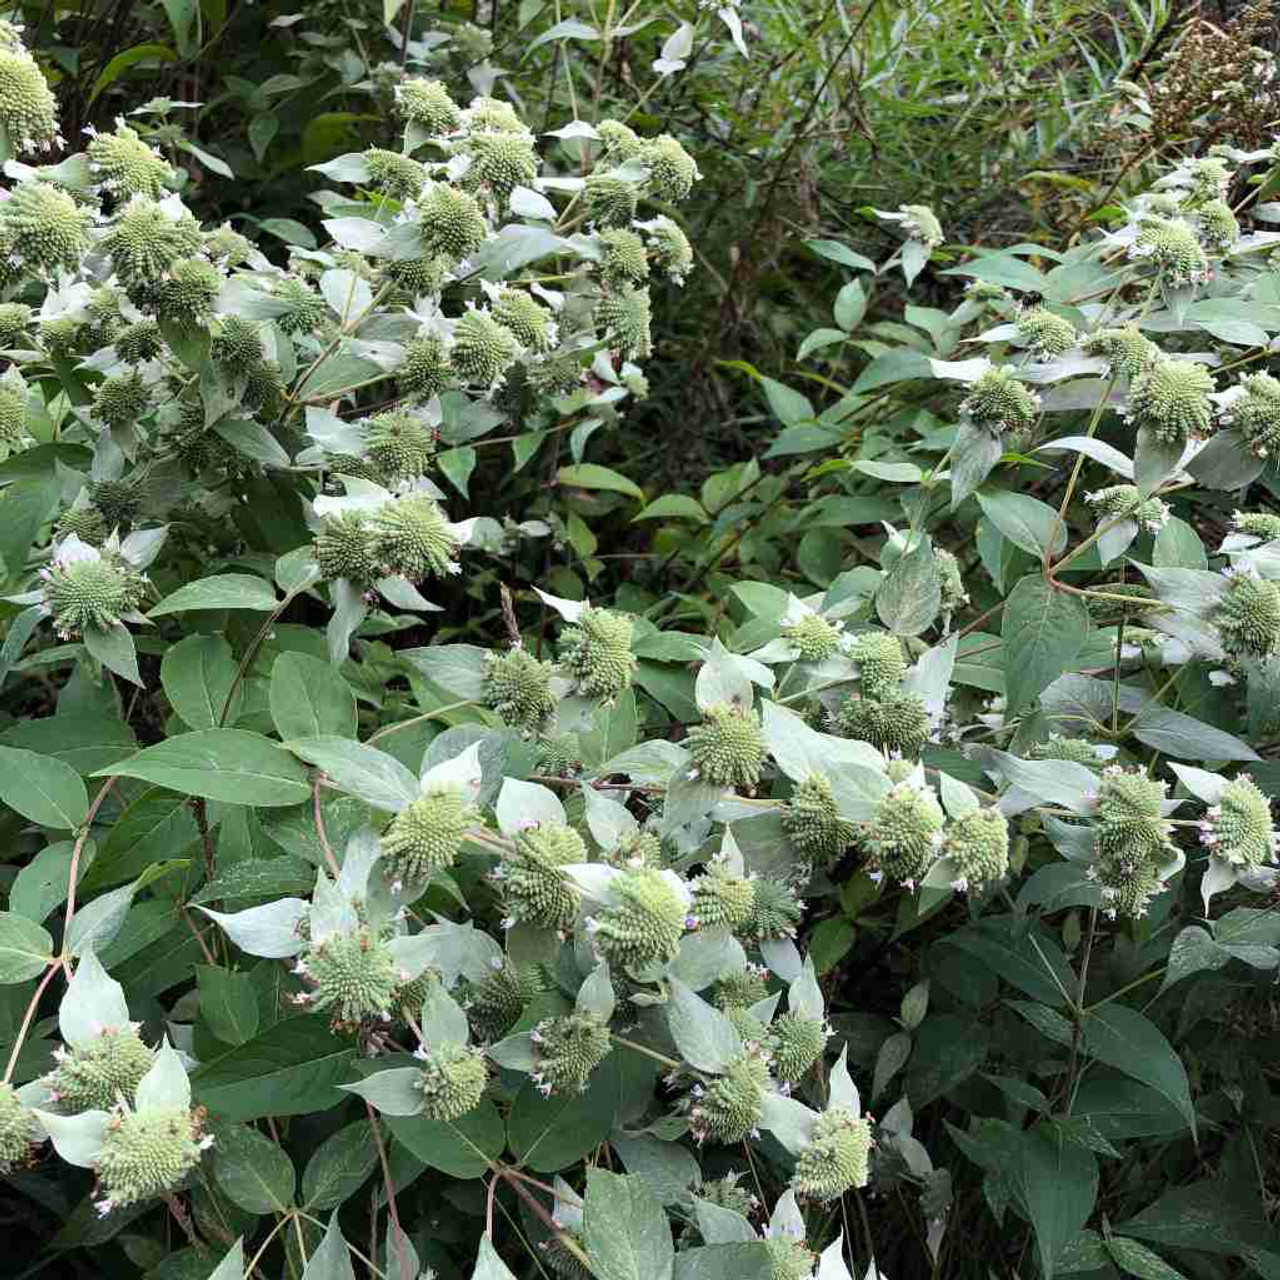 Pycnanthemum muticum - Blue Mountain mint - showy native perennial for naturalization, pollinator or butterfly gardens